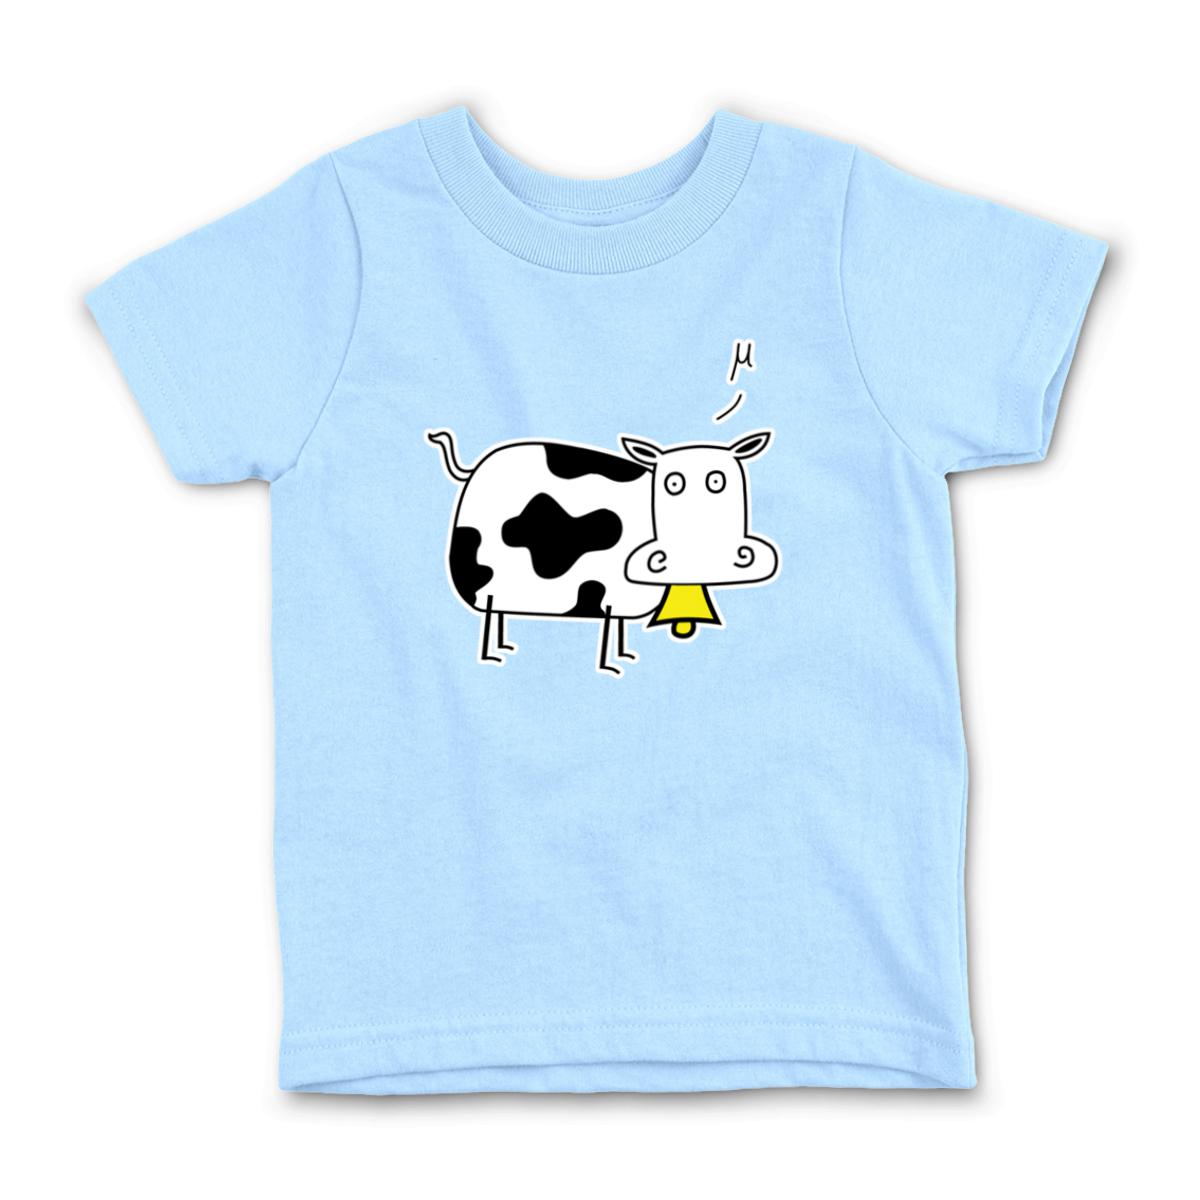 Mu Cow Kid's Tee Small light-blue